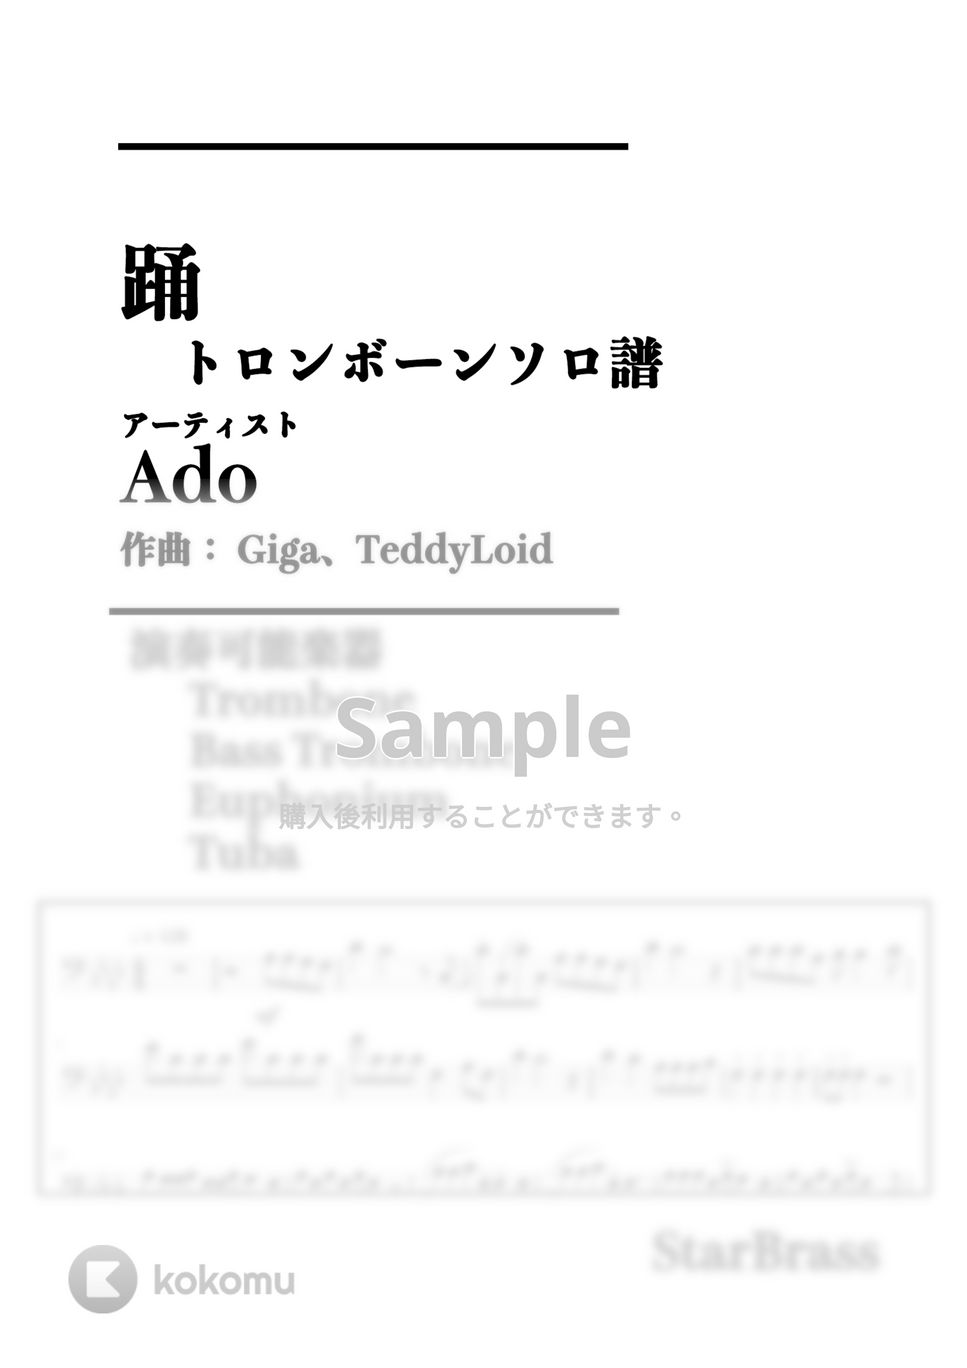 Ado - 踊 (-Trombone Solo- 原キー) by Creampuff